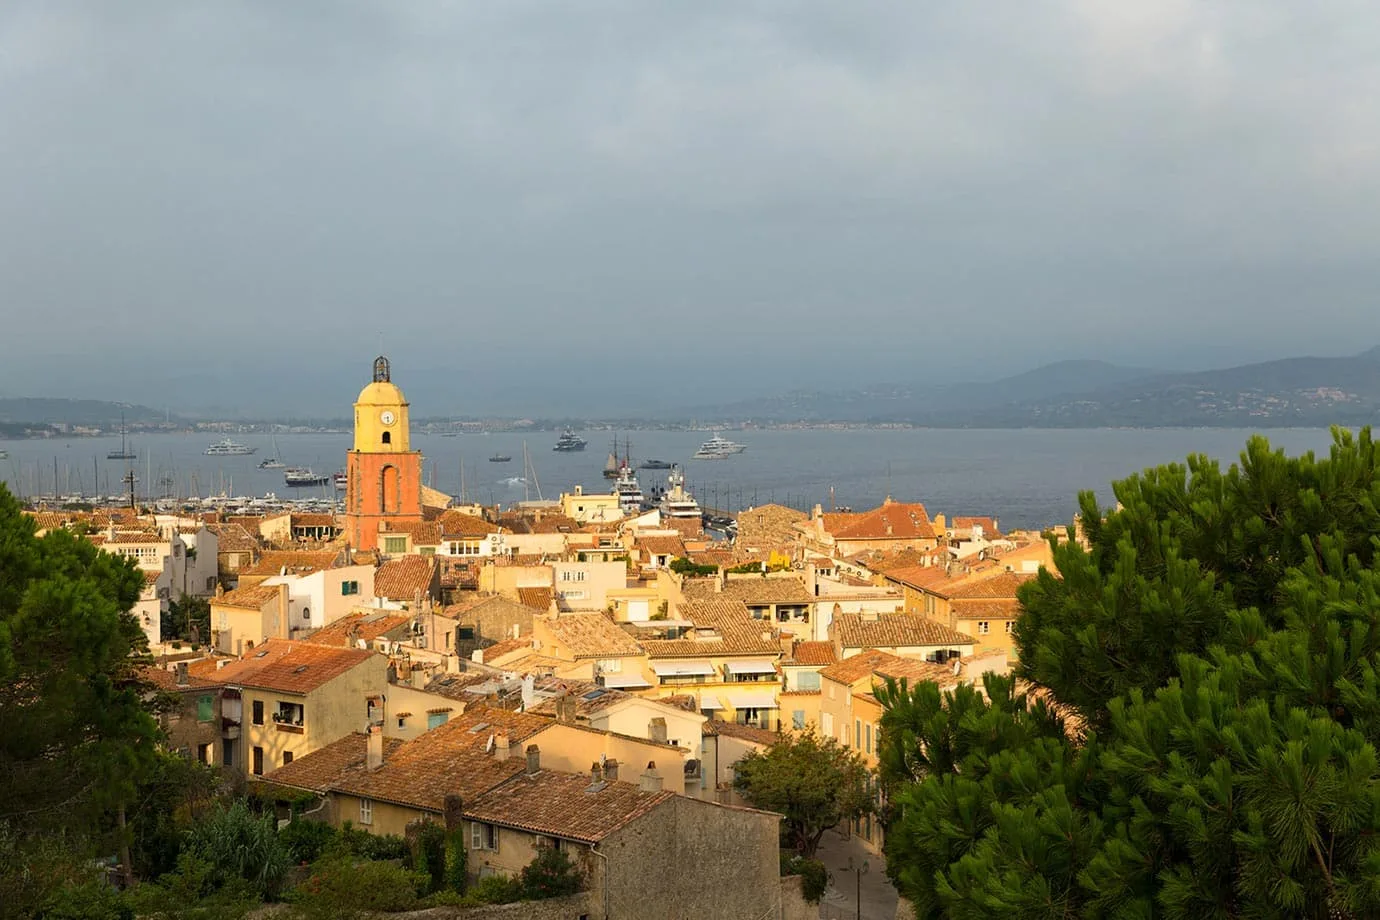 Views of St-Tropez